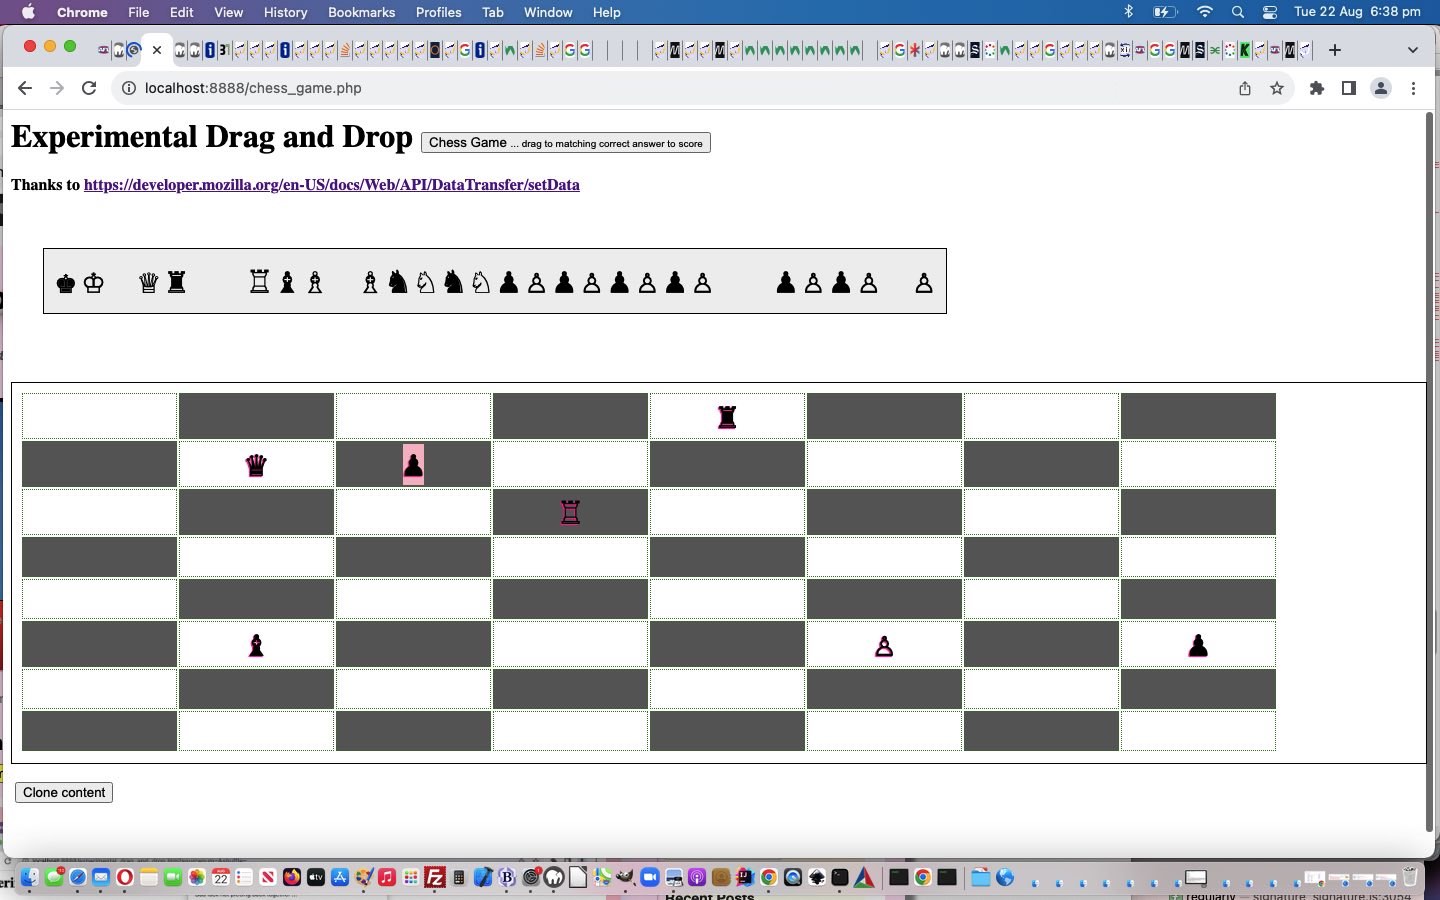 Ice CHESS ♜  Chess board, Chess master, Chess